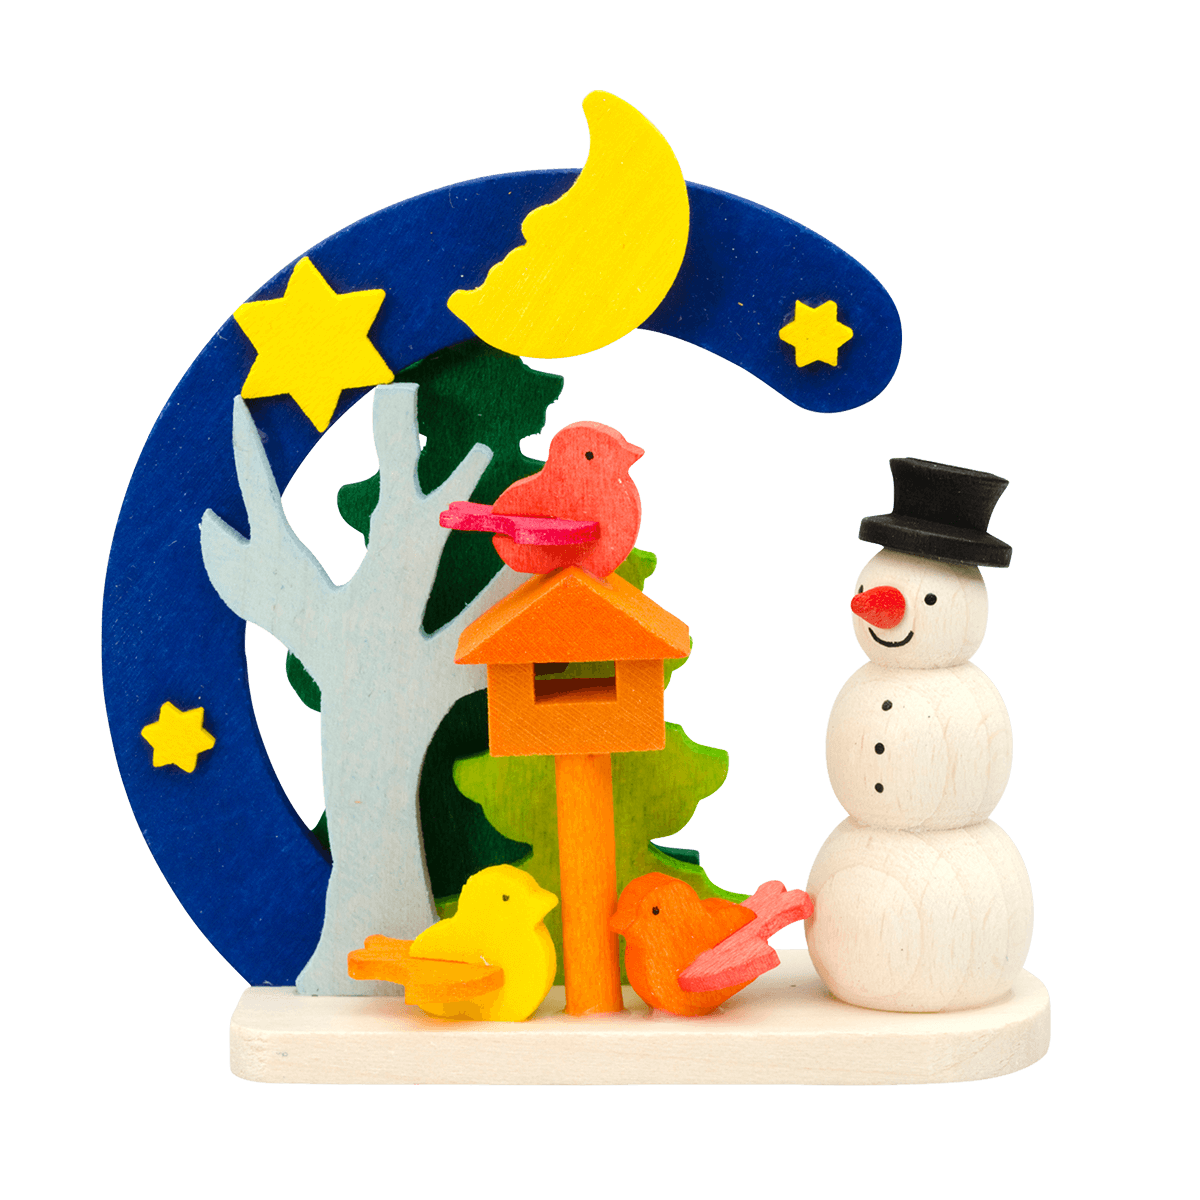 Arch 'Snowman' Ornament with bird house